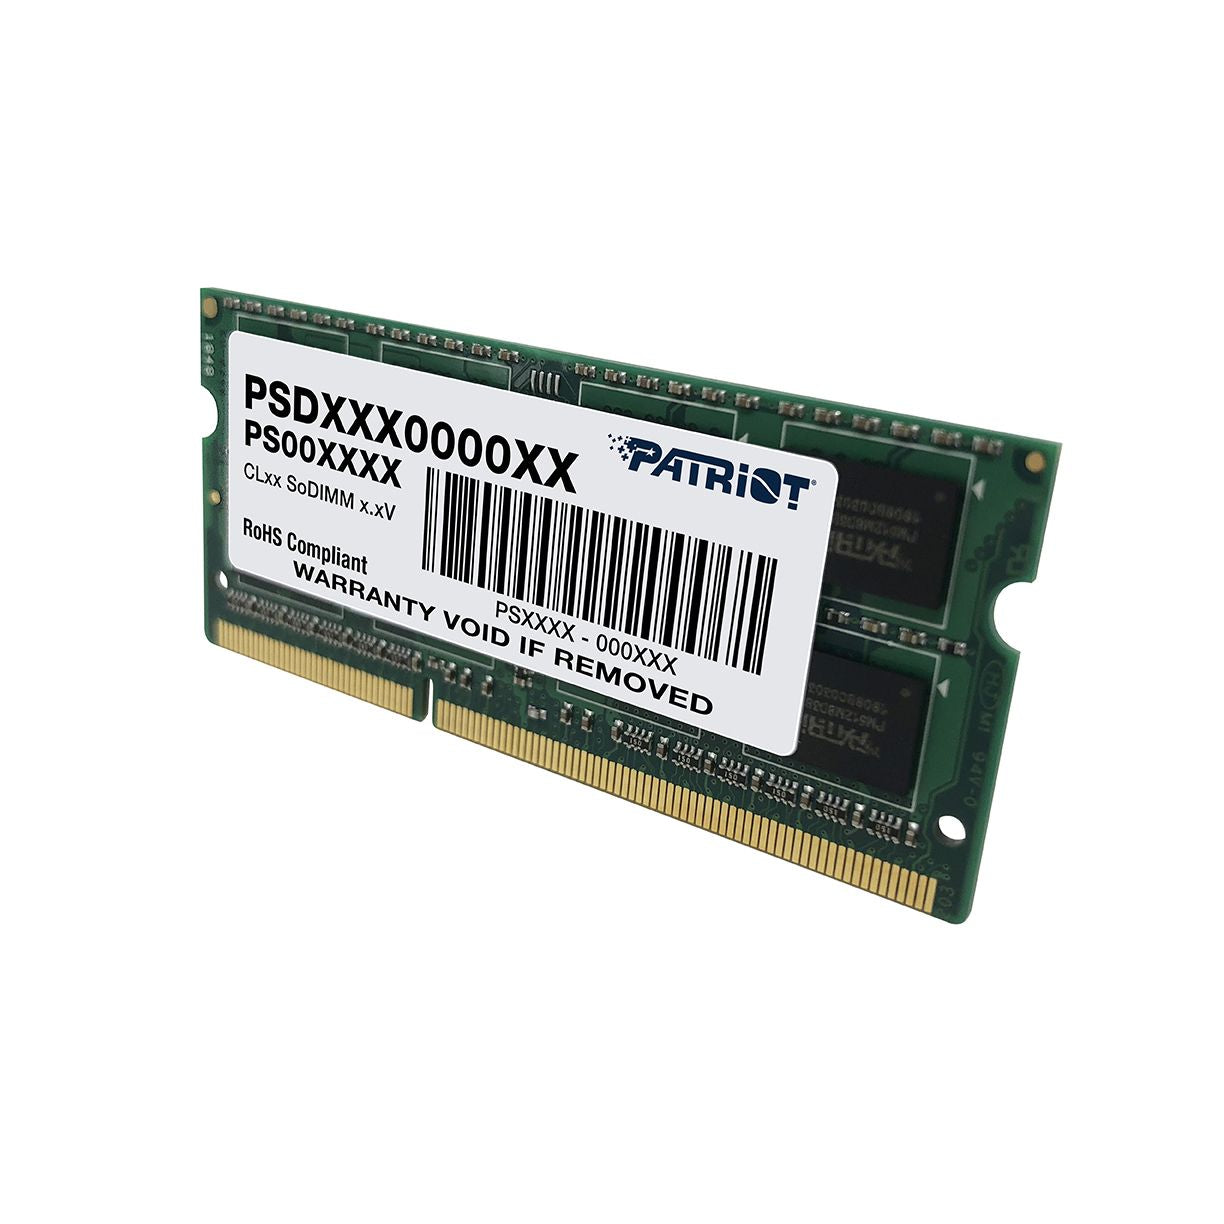 Patriot Signature Series - DDR3 SODIMM PC3-10600 (1333MHz) CL9_Single Module